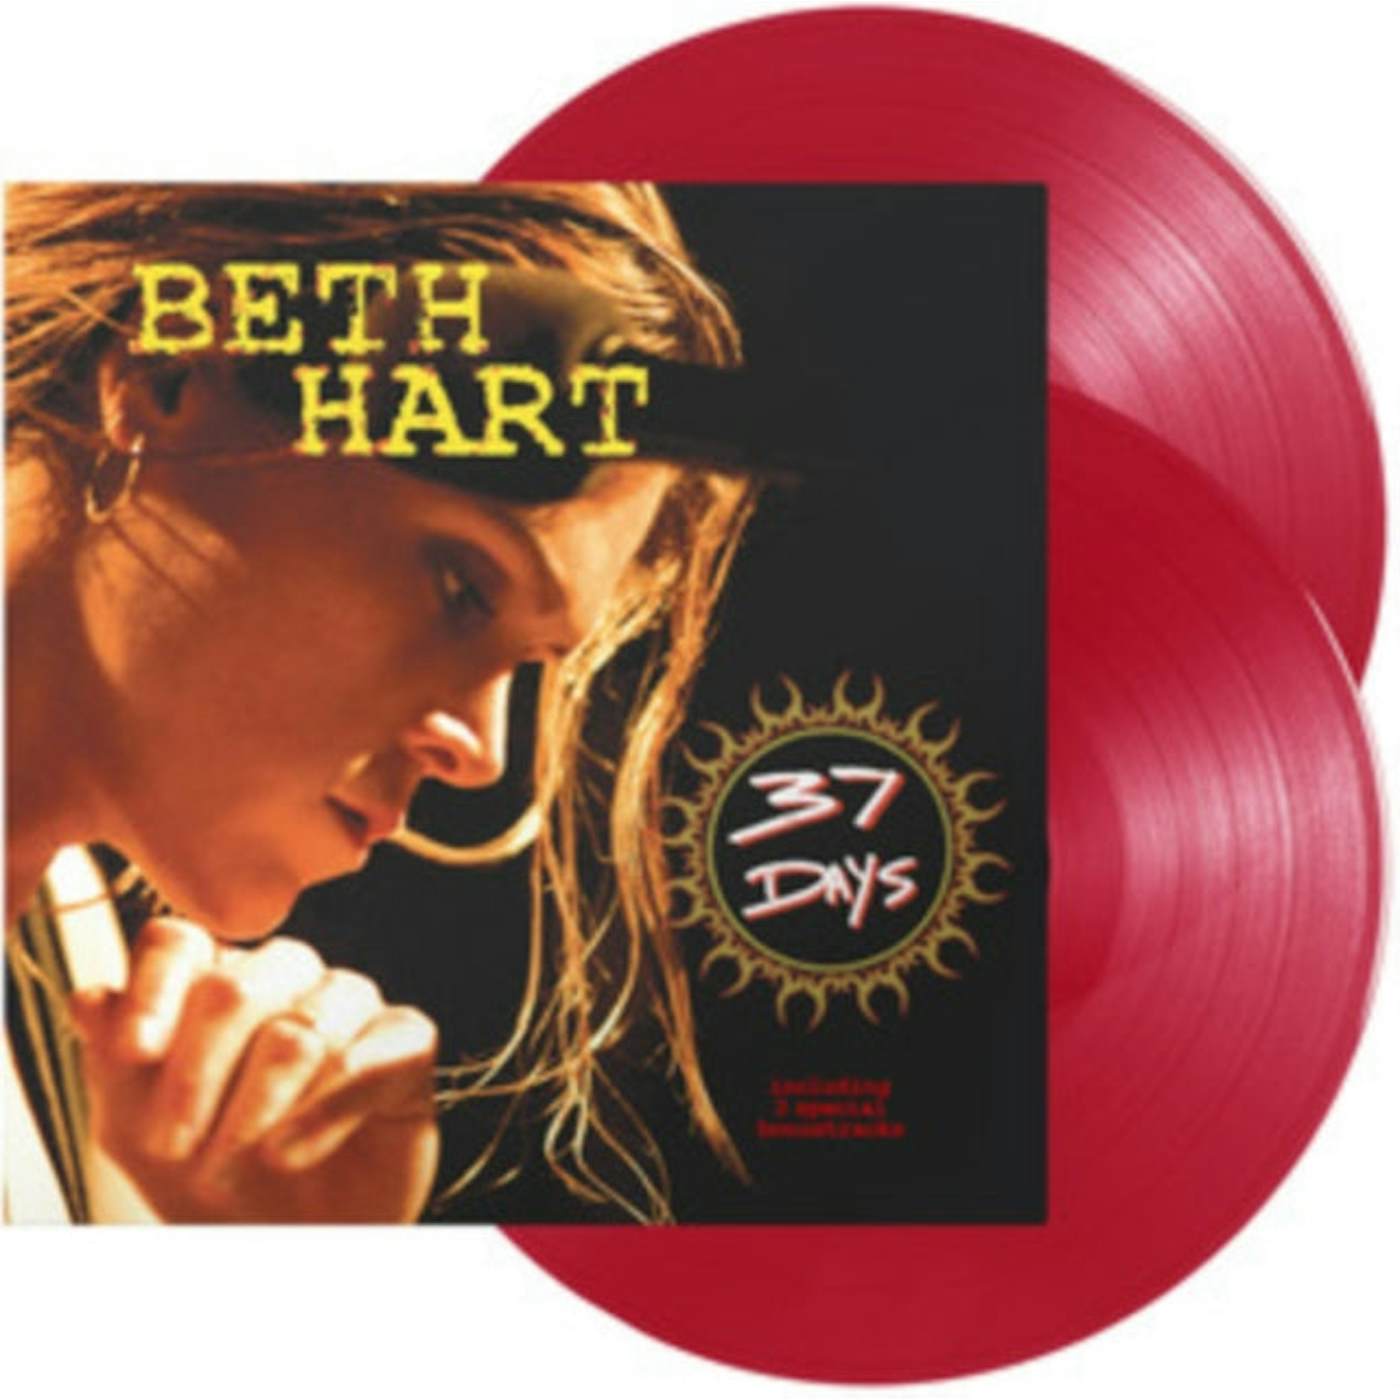 Beth Hart LP - 37 Days (Vinyl)